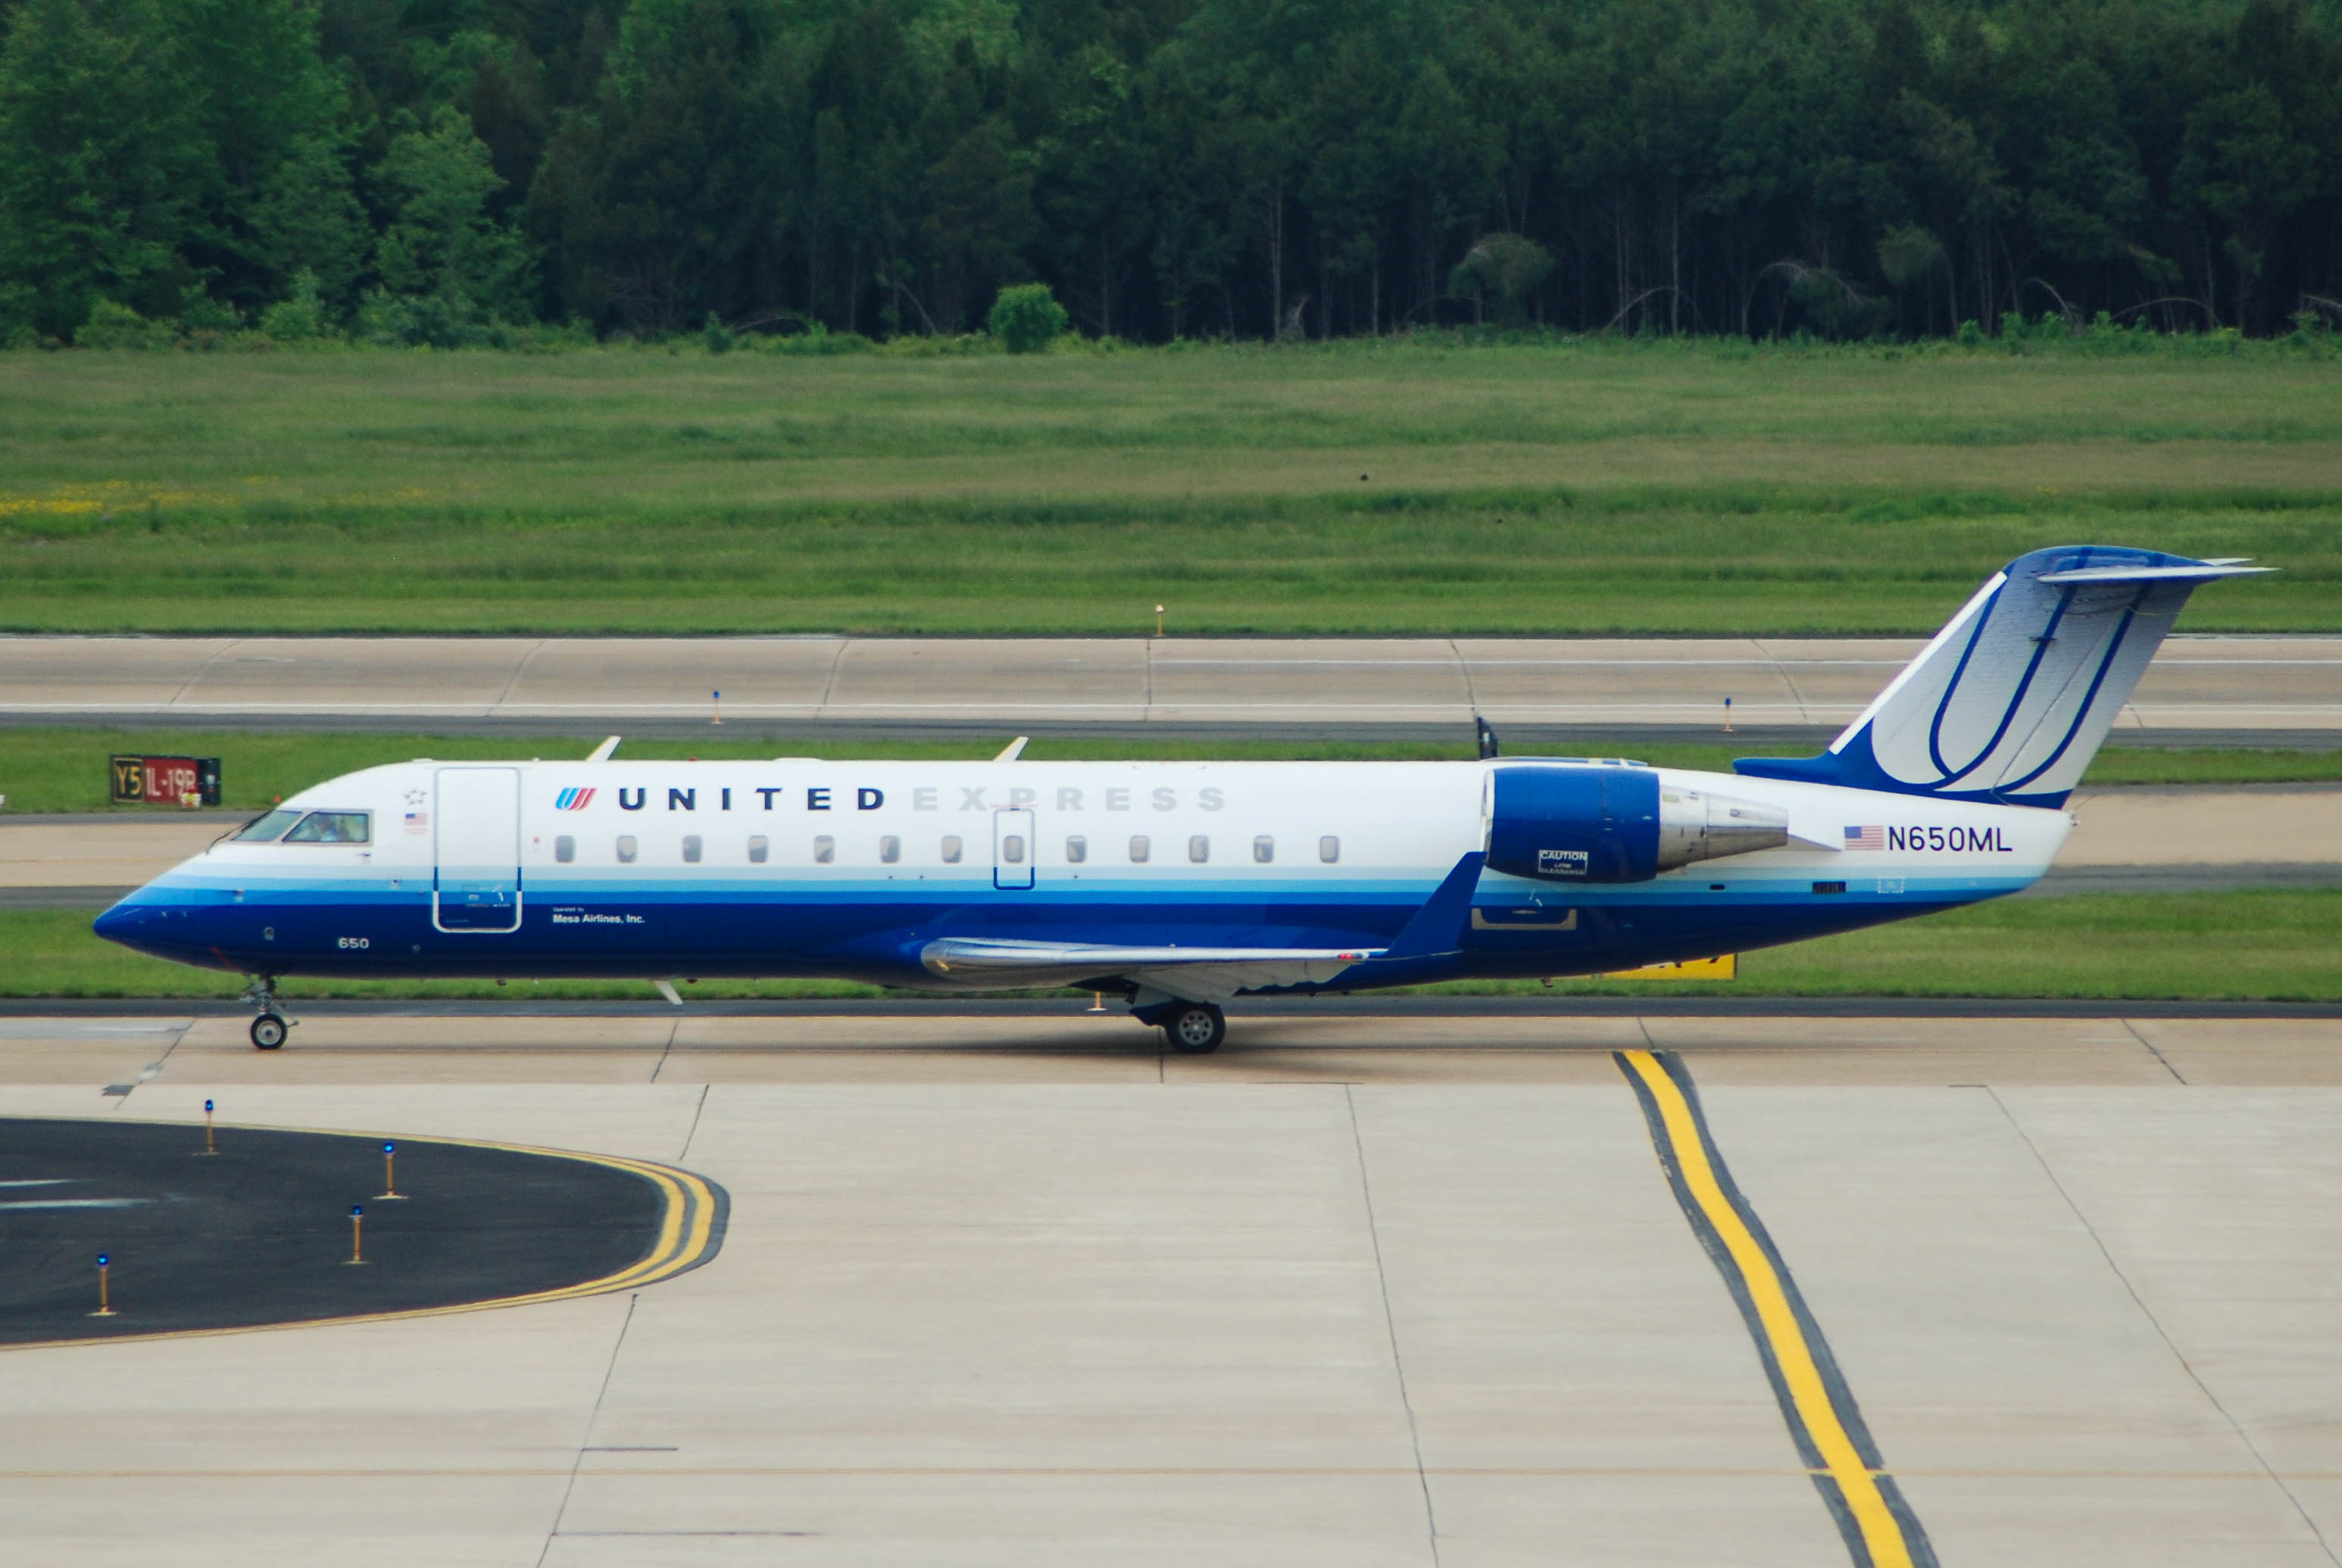 N650ML/N650ML United Express Bombardier CRJ-200 Airframe Information - AVSpotters.com